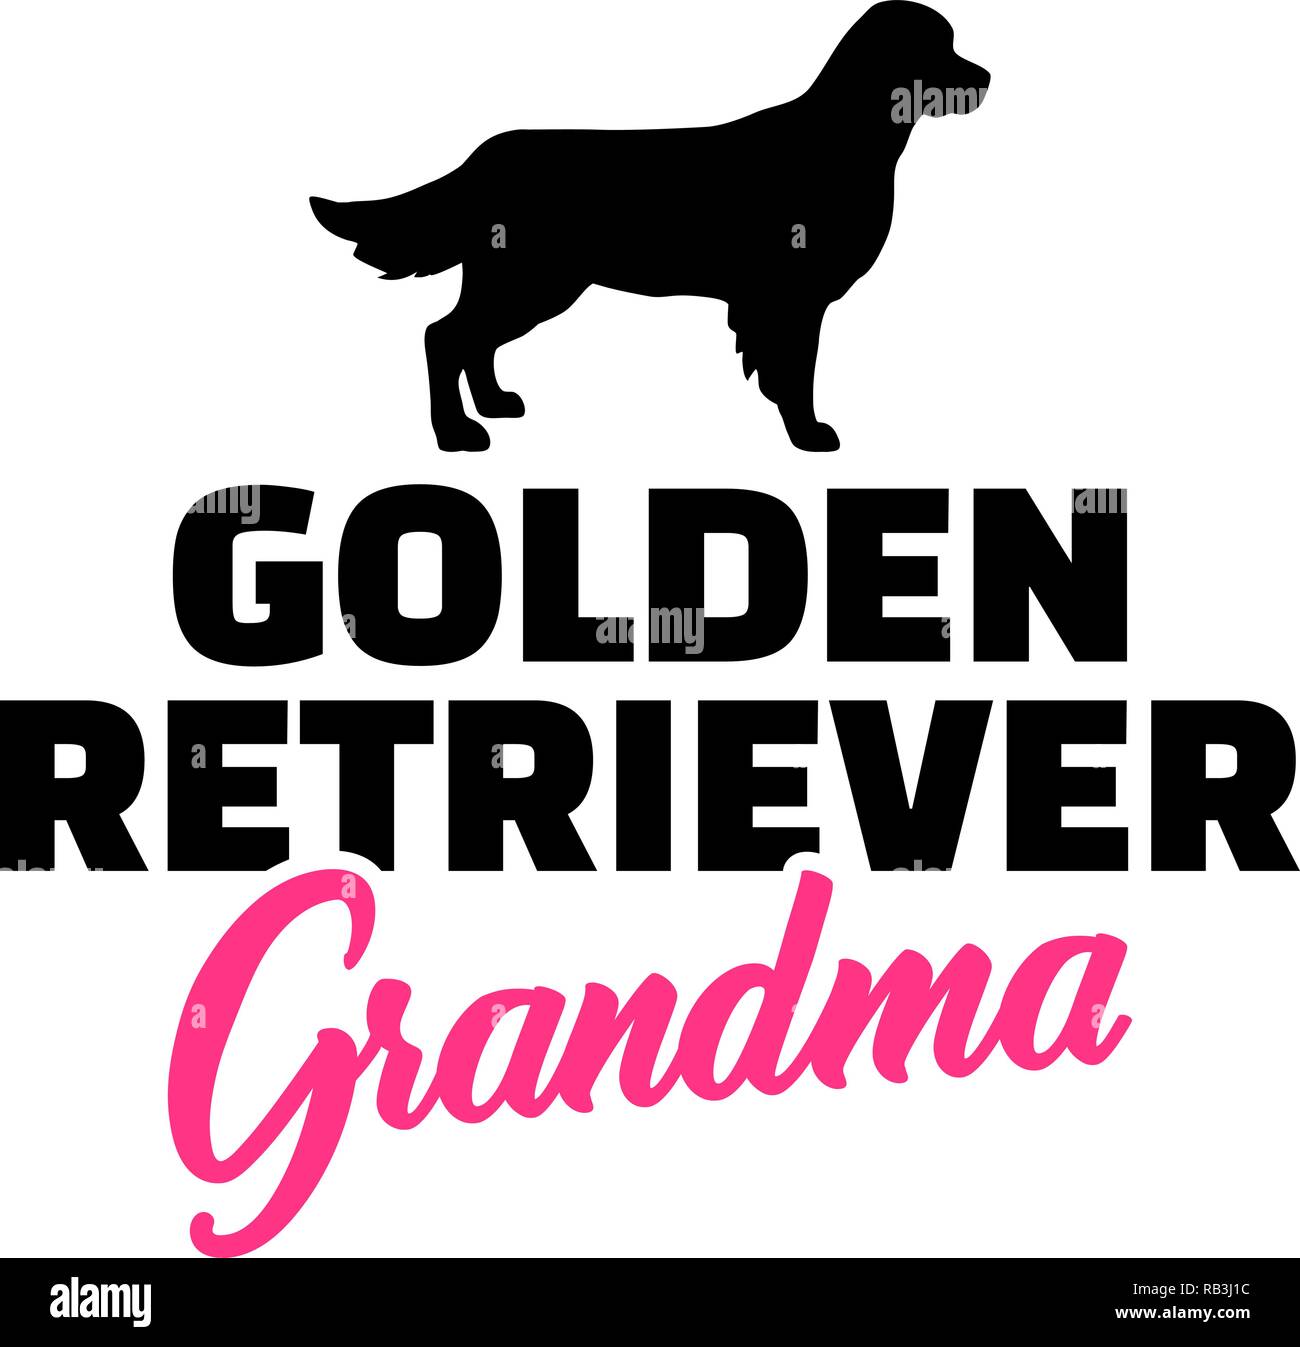 Golden Retriever Grandma silhouette Schwarz Stock Vektor